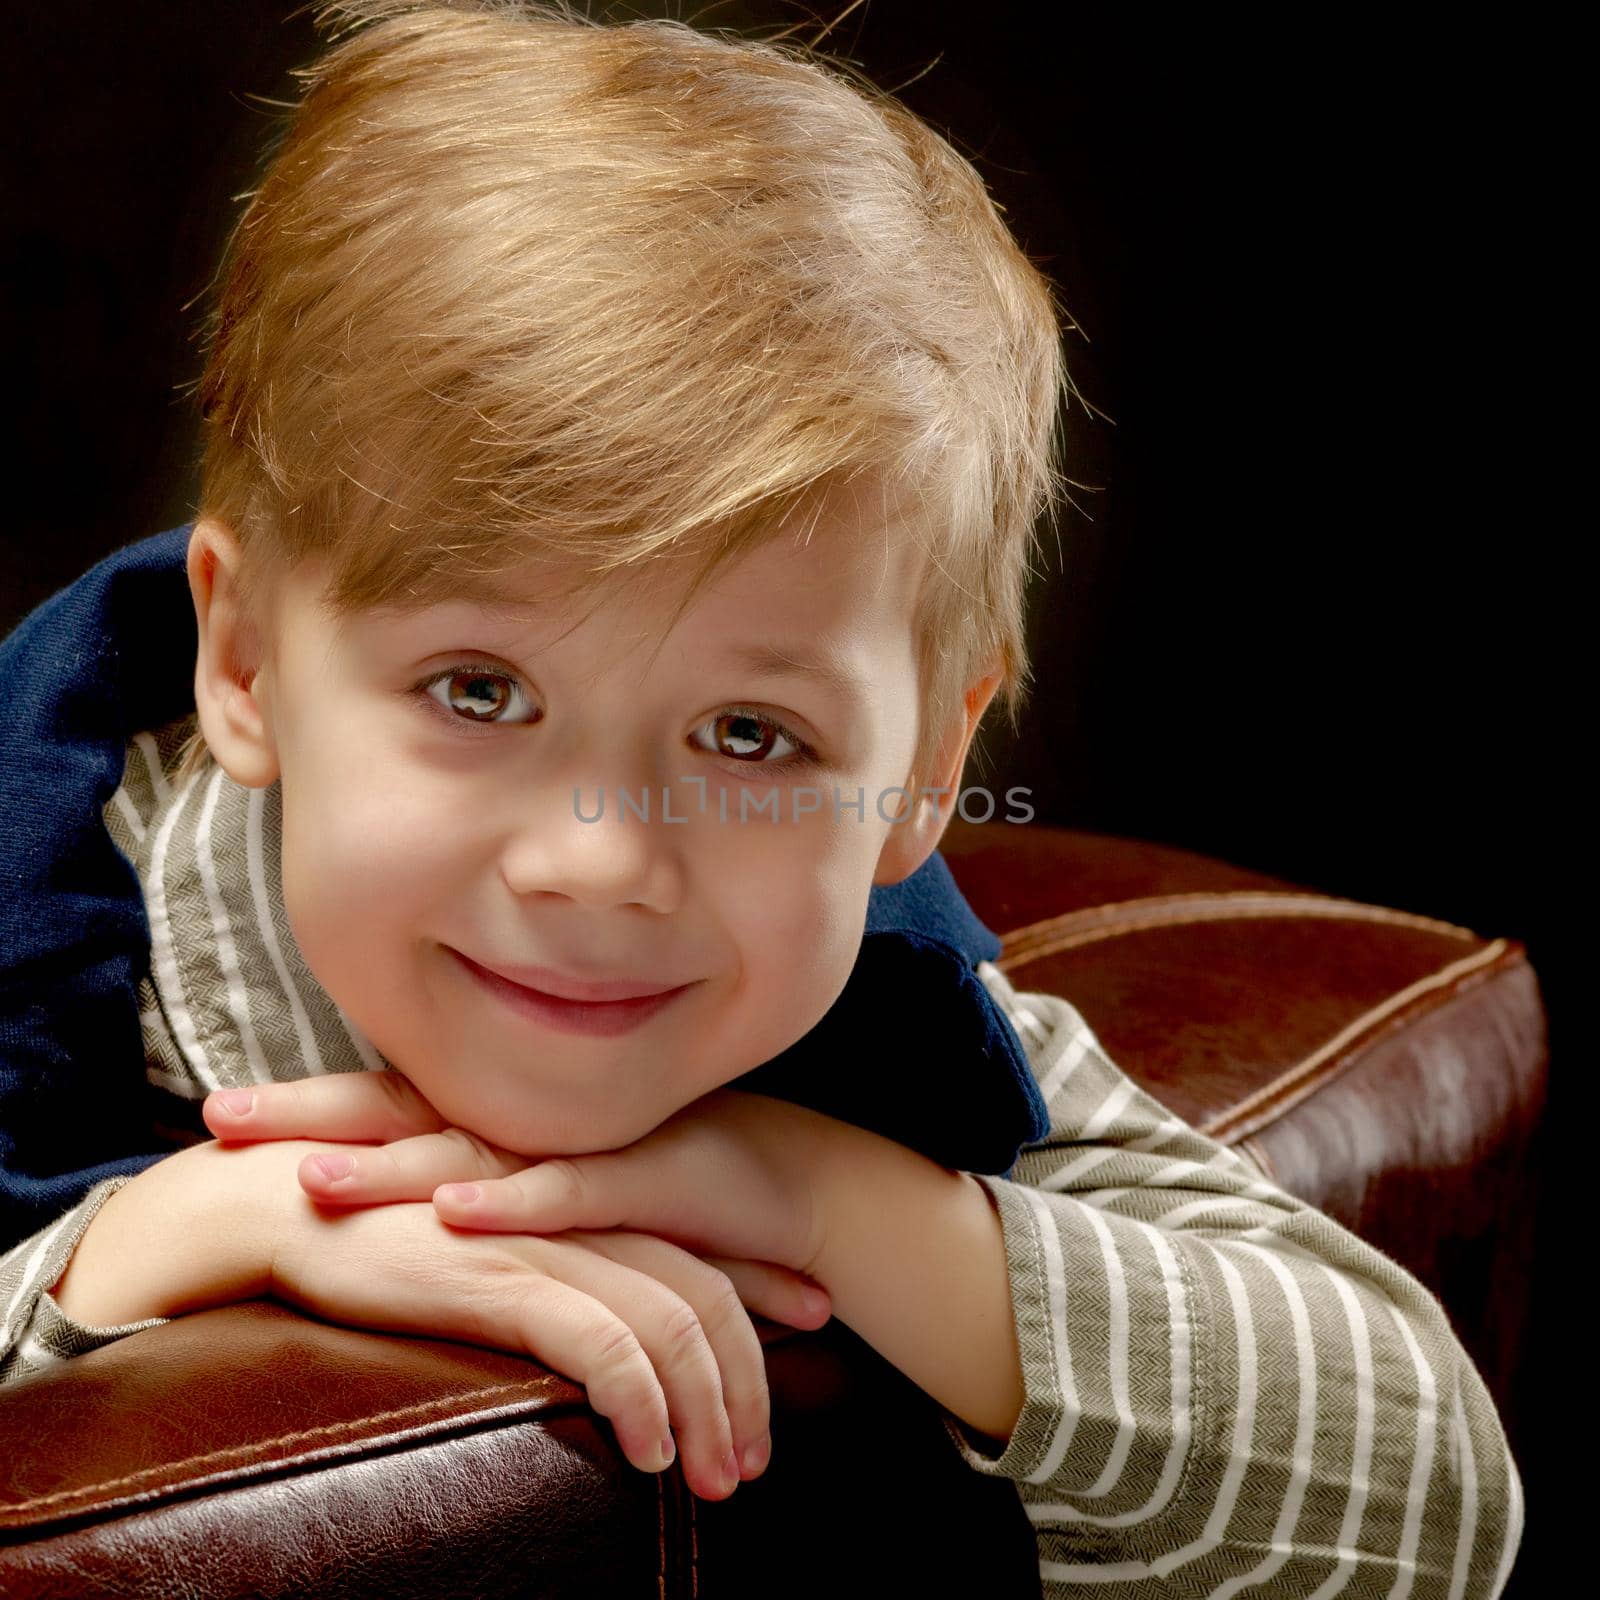 Beautiful little boy closeup. Studio portrait on black background. Concept layout for magazine cover.